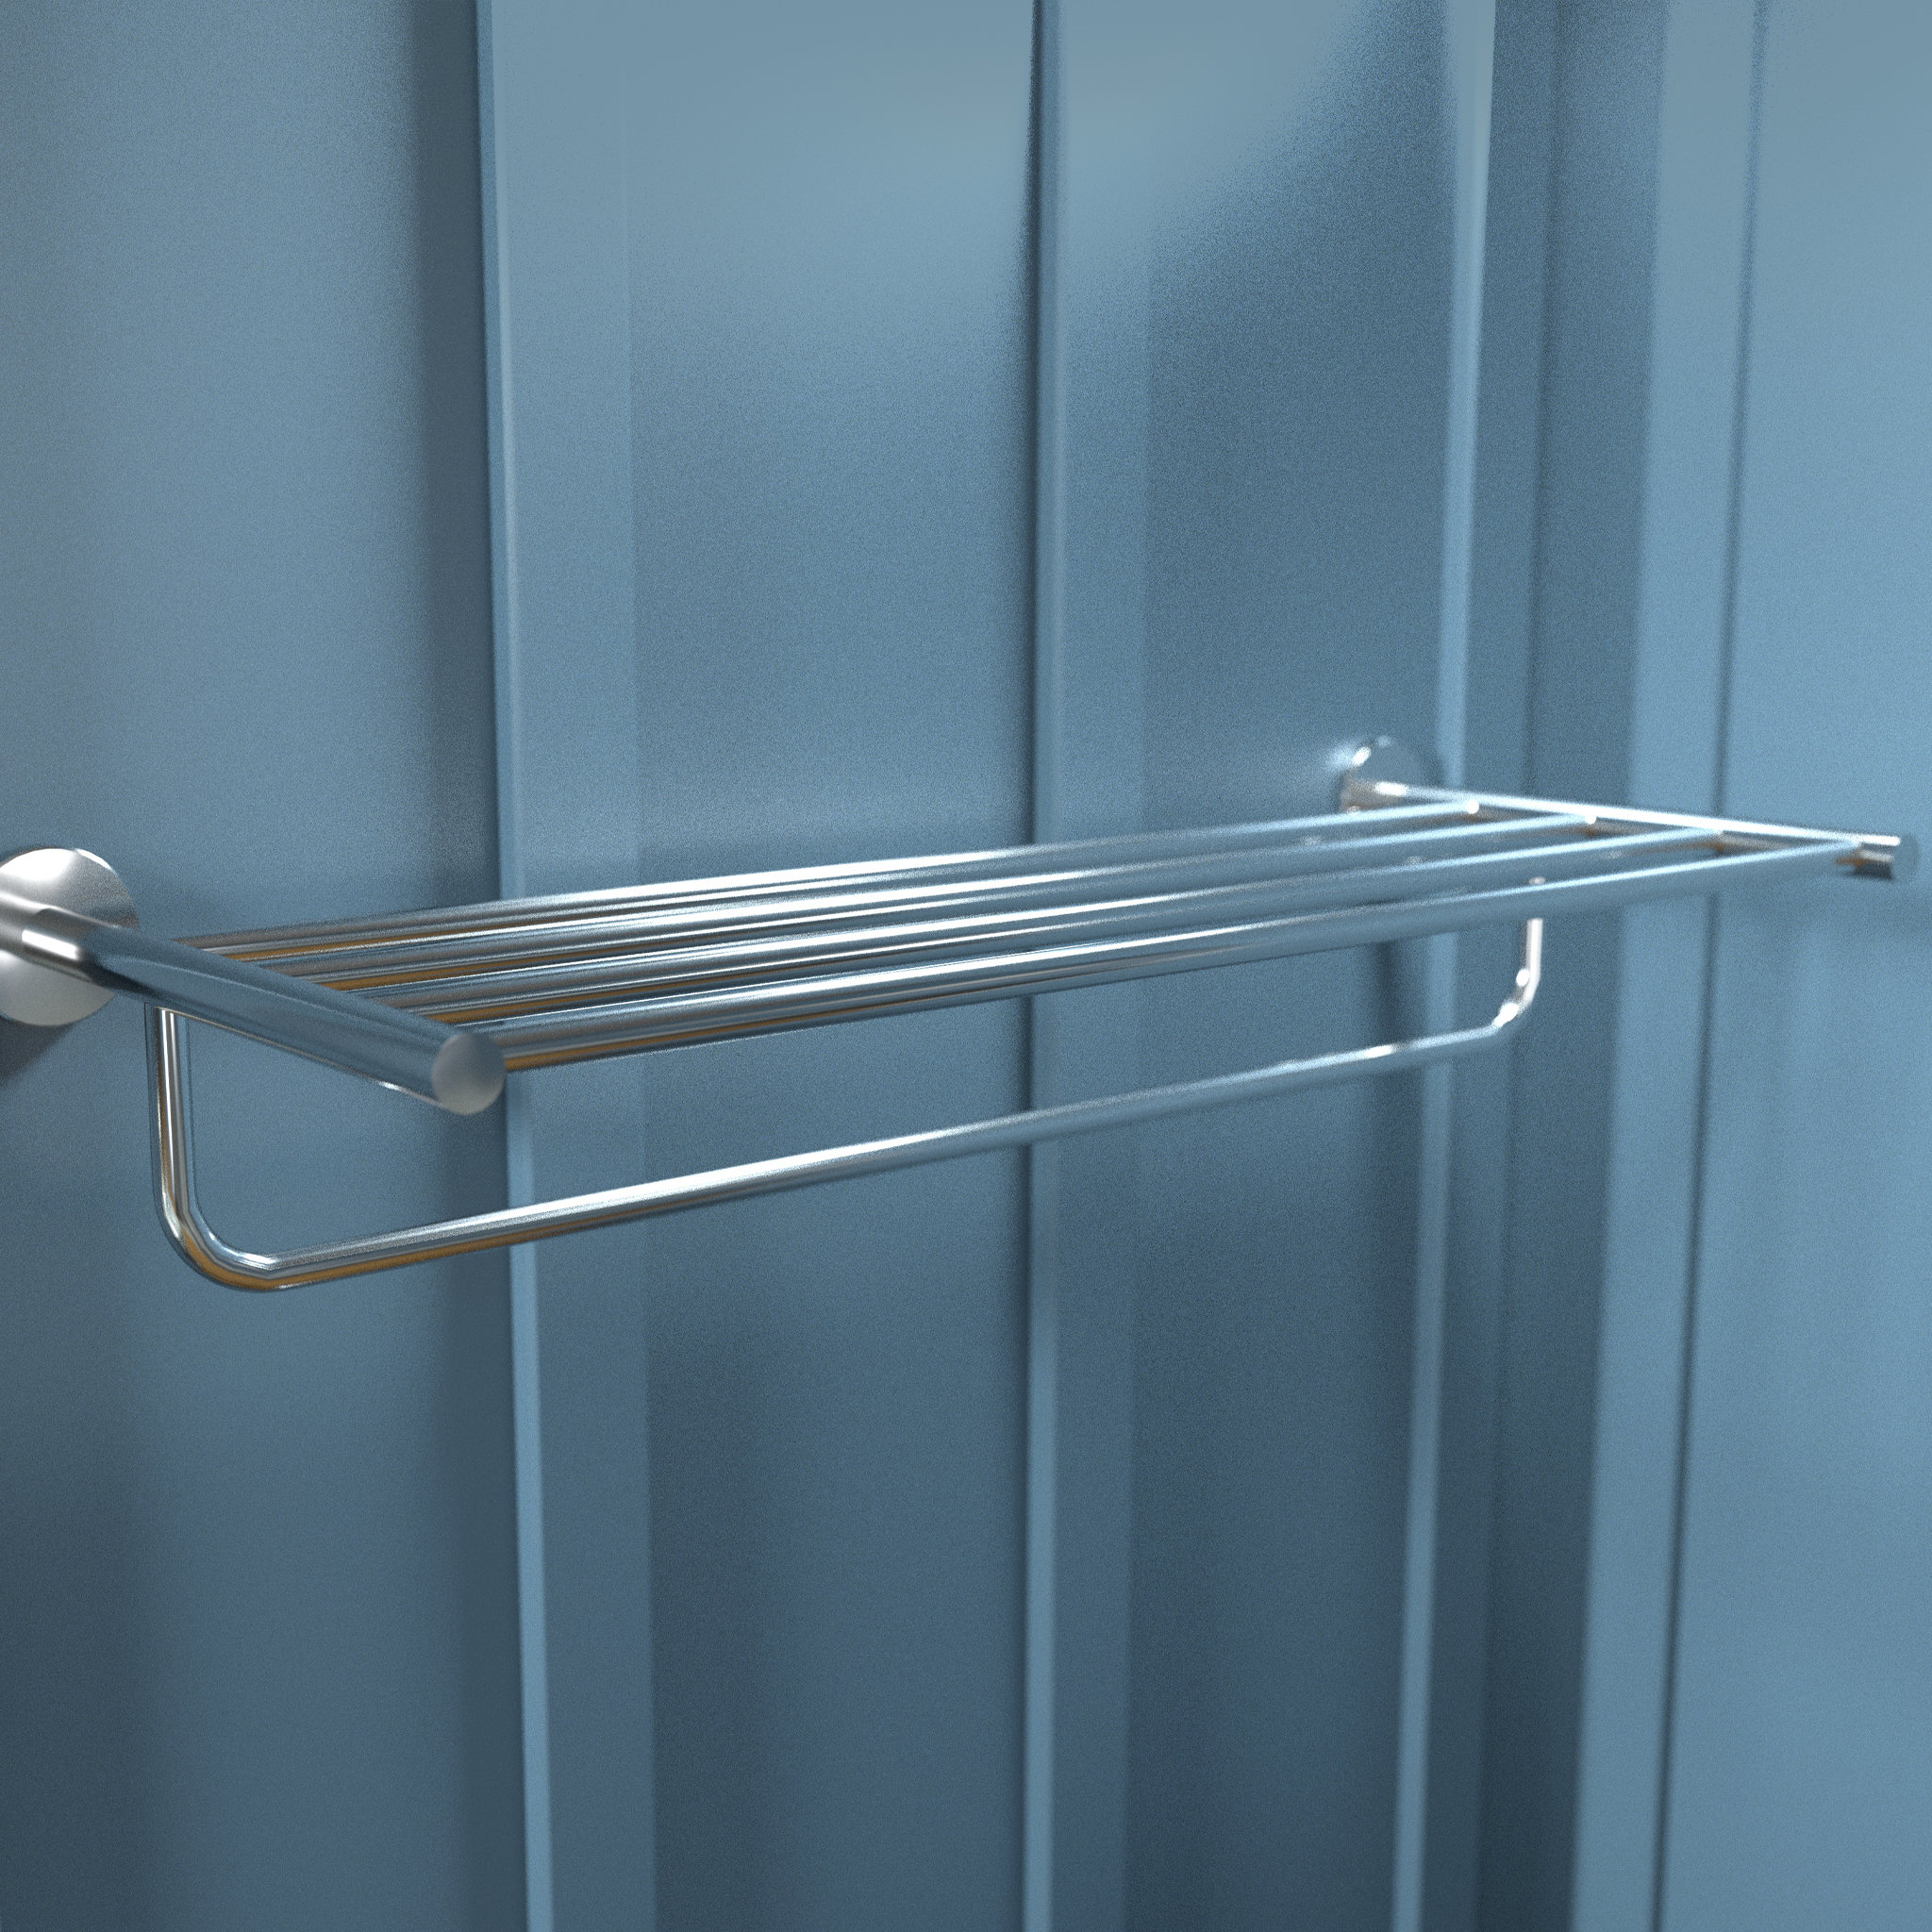 Double Chrome Wall Mounted Bathroom Towel Rail Holder Storage Rack Shelf Bar